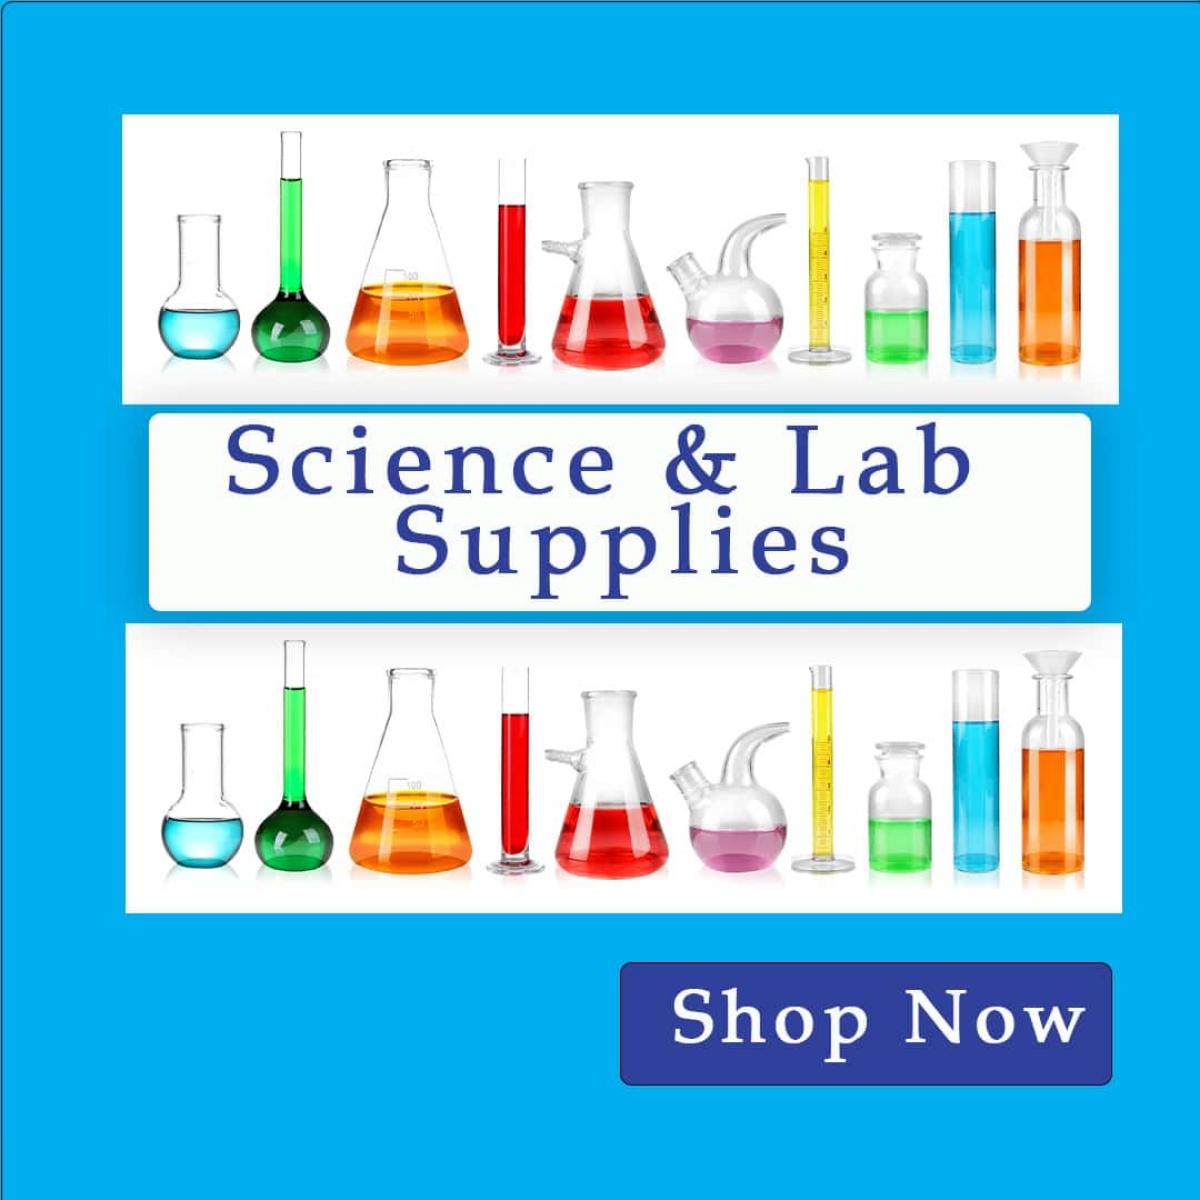 Science & Lab Supplies